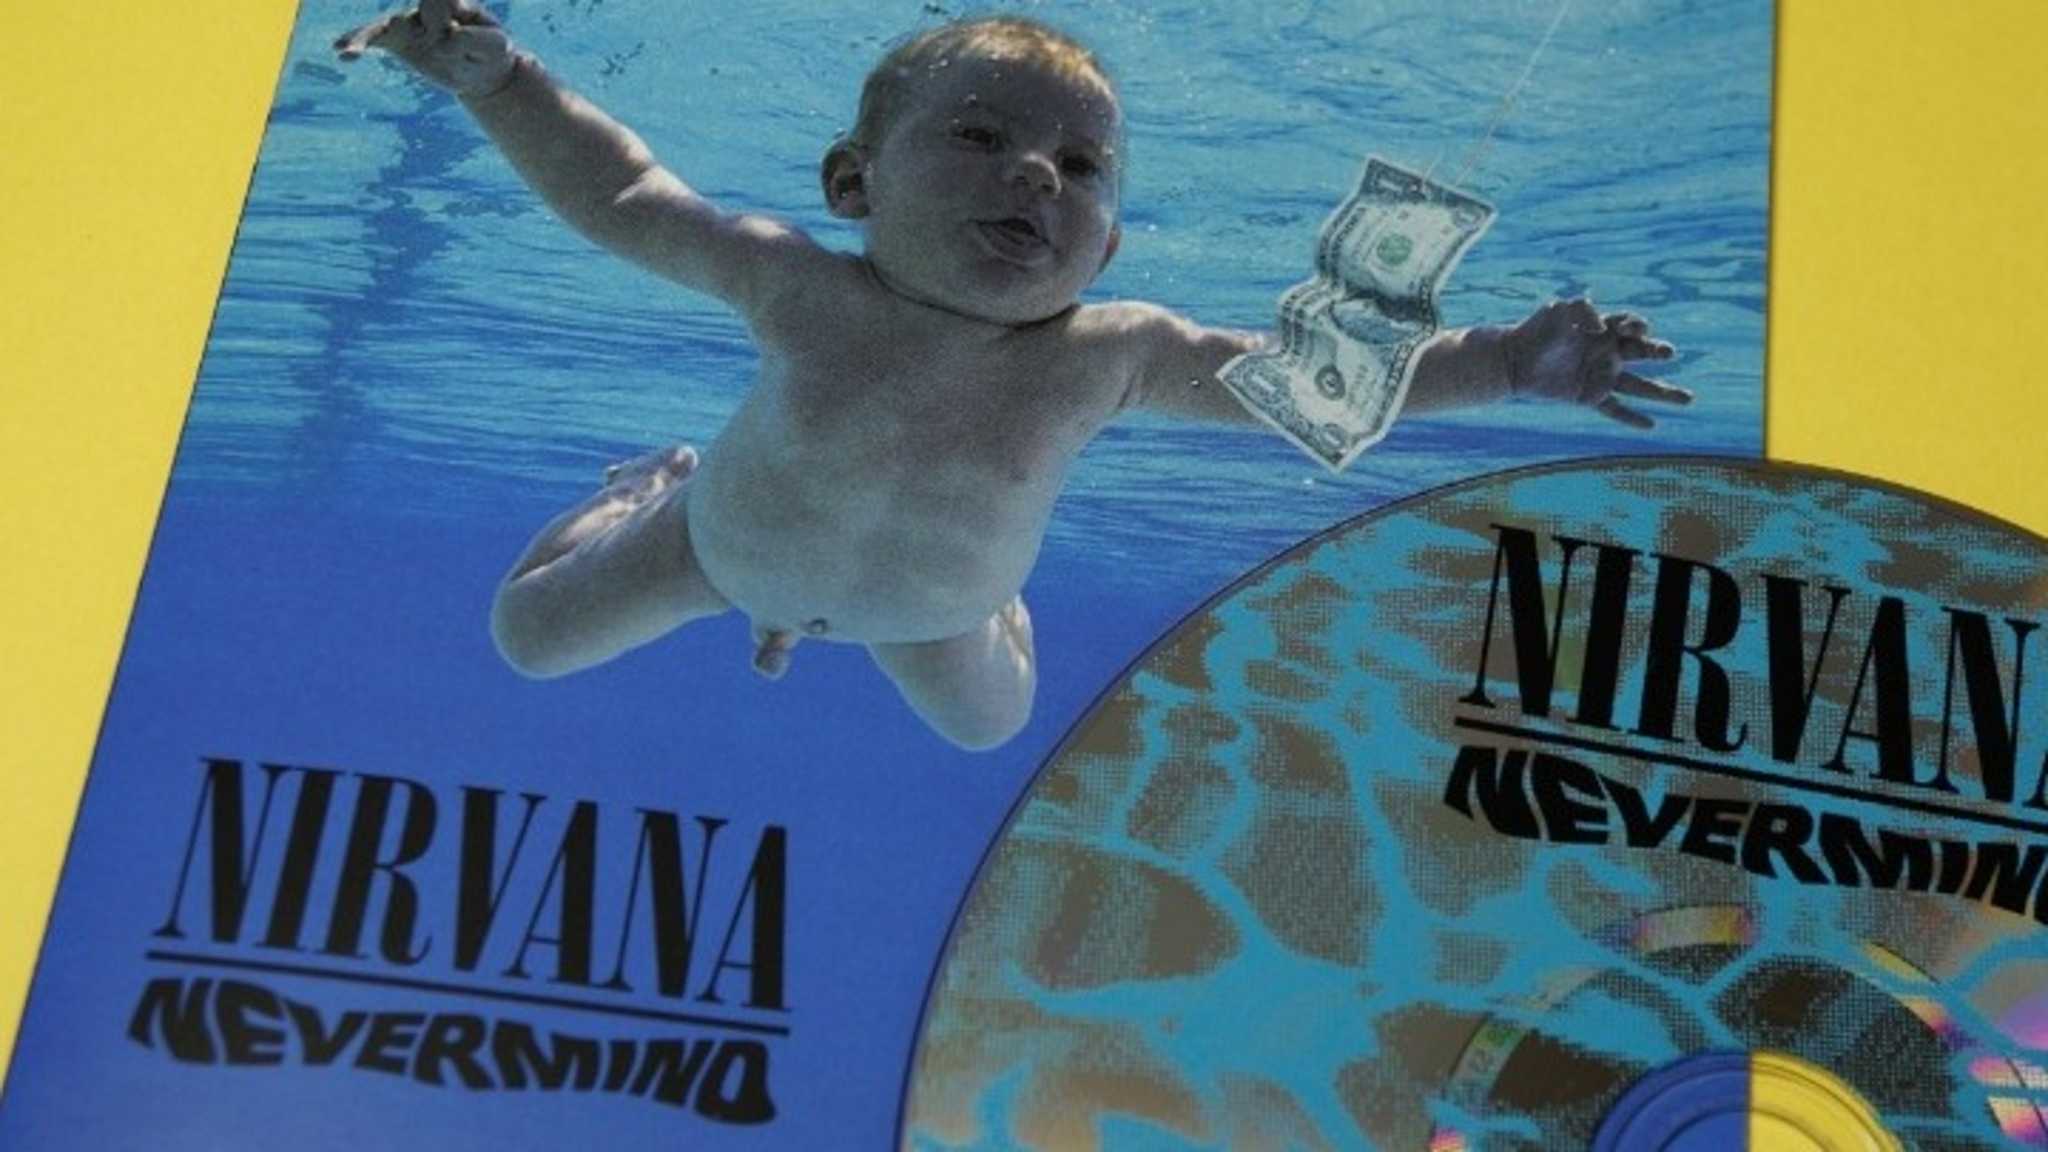 Nirvana - Στο αρχείο η μήνυση του Σπενσερ Ελντεν που εμφανιζόταν μωρό στο άλμπουμ Nevermind